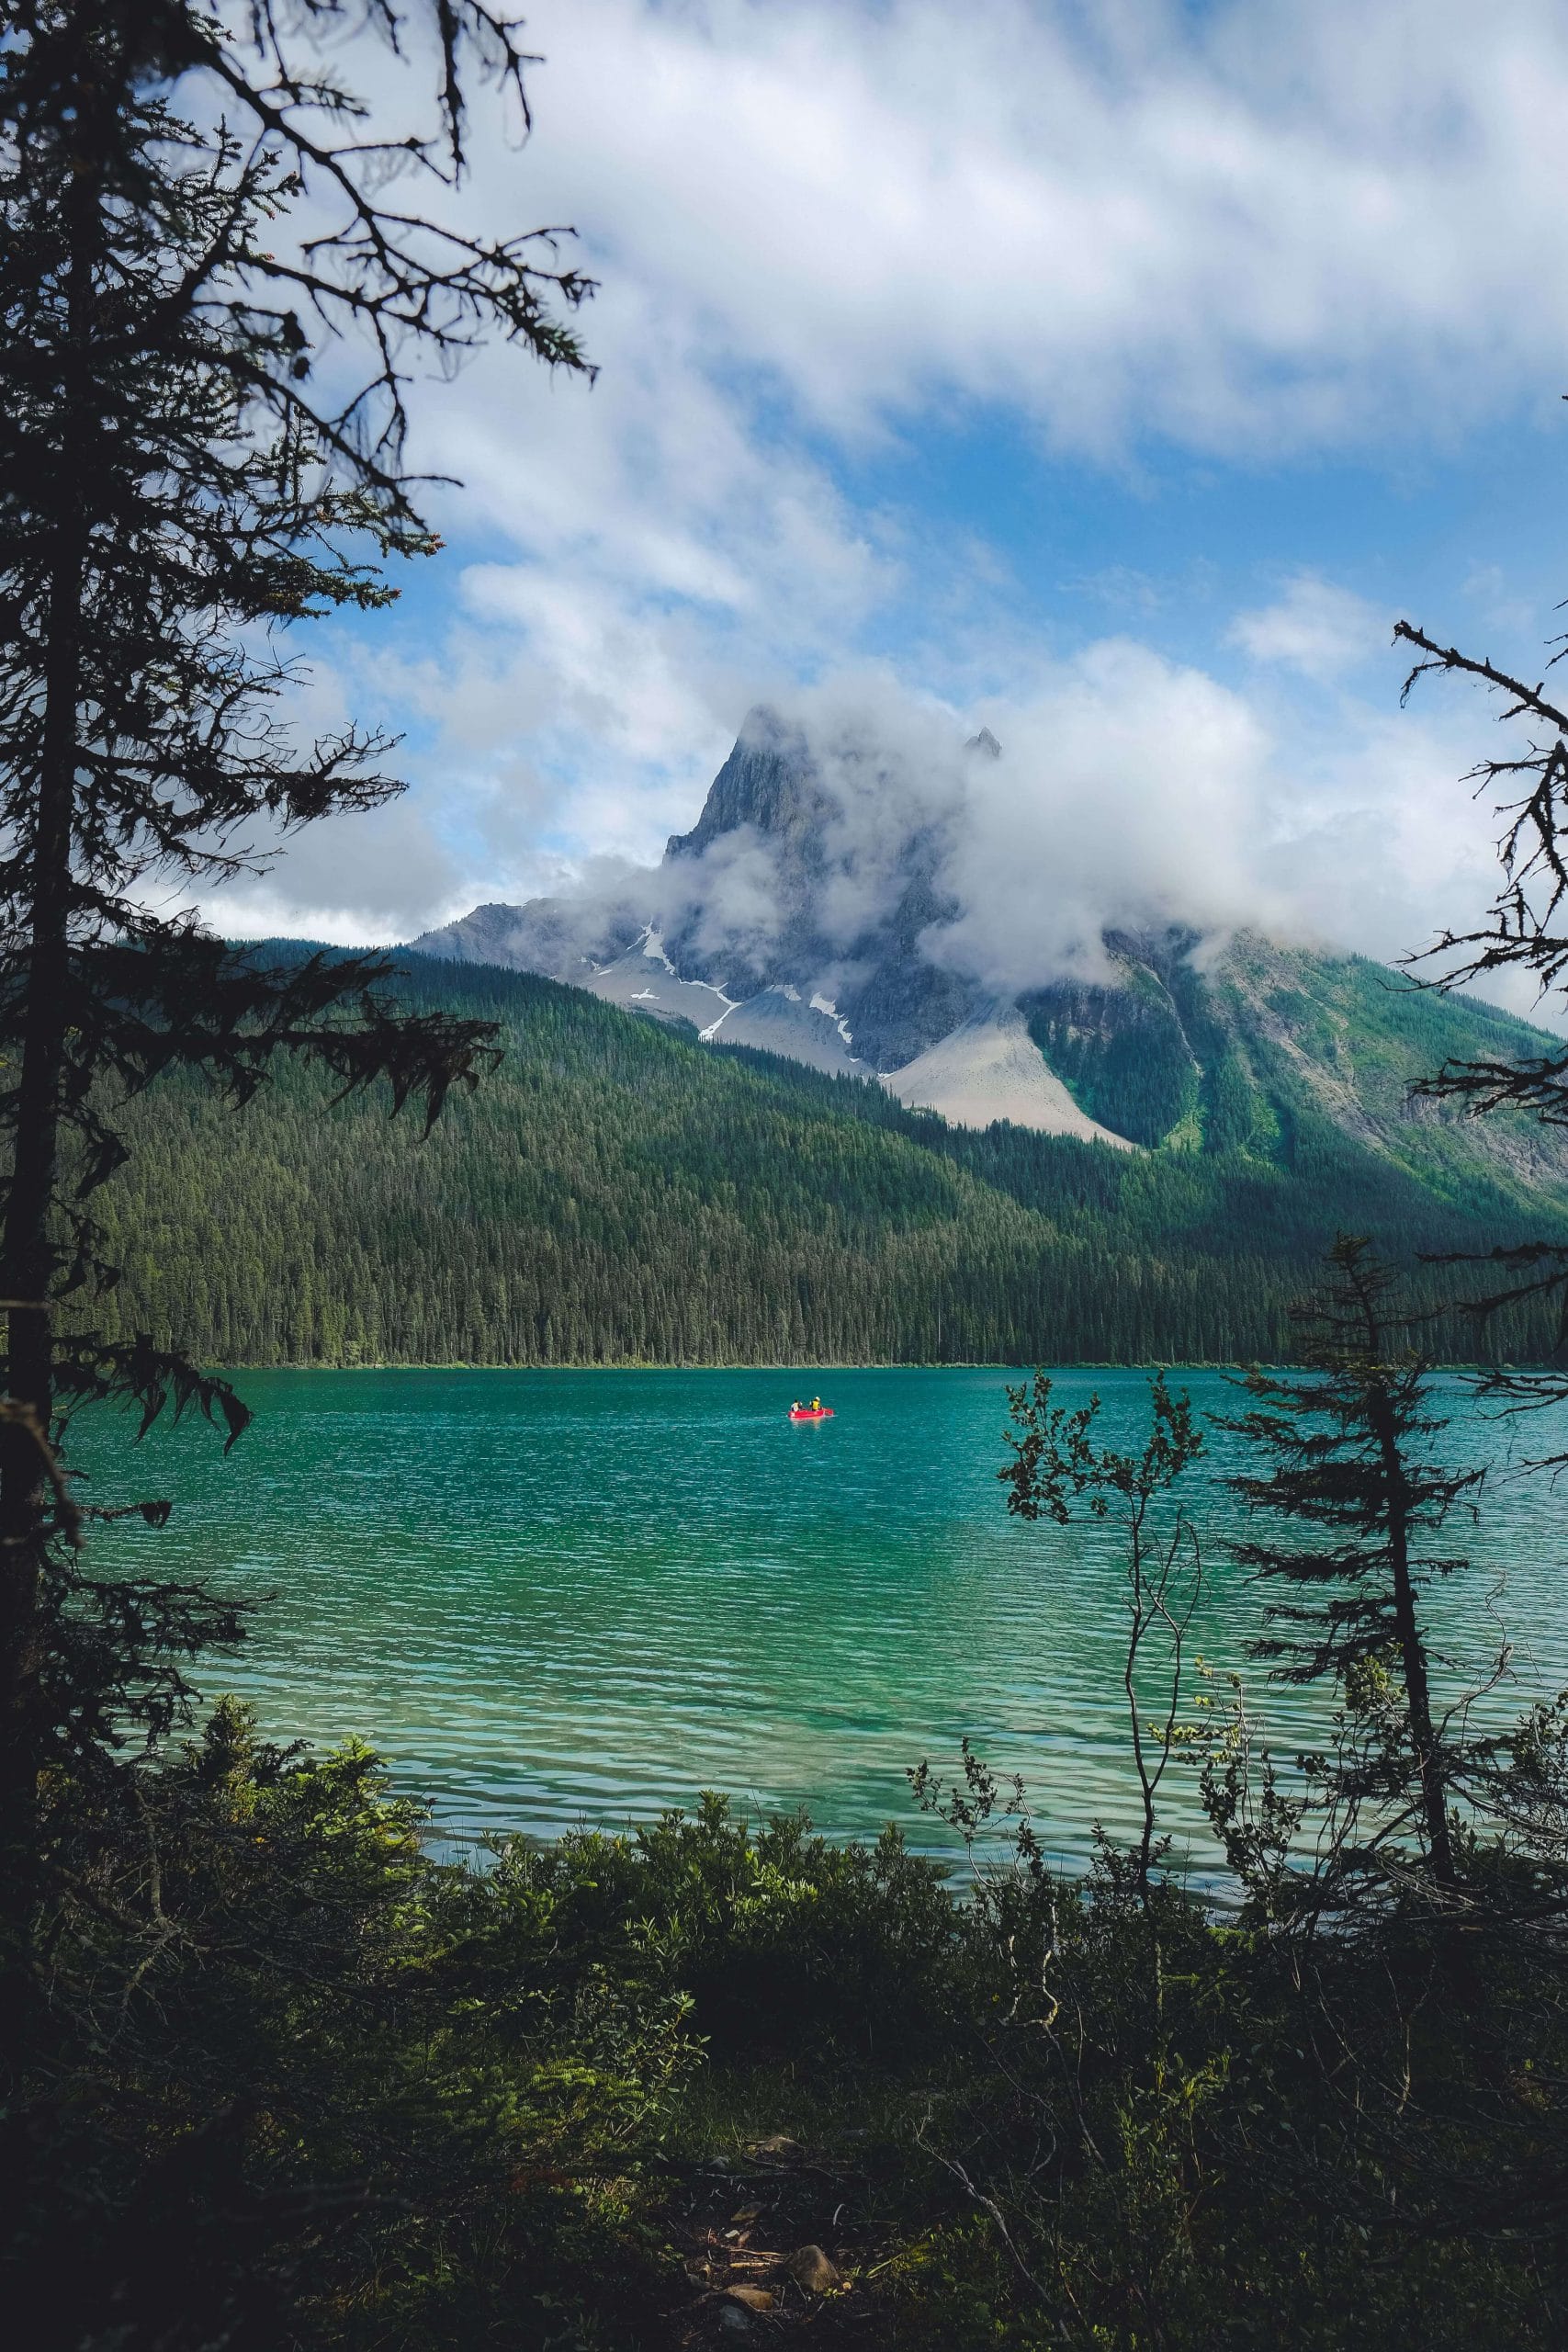 Renting a canoe, Emerald Lake, Yoho National Park in British Columbia